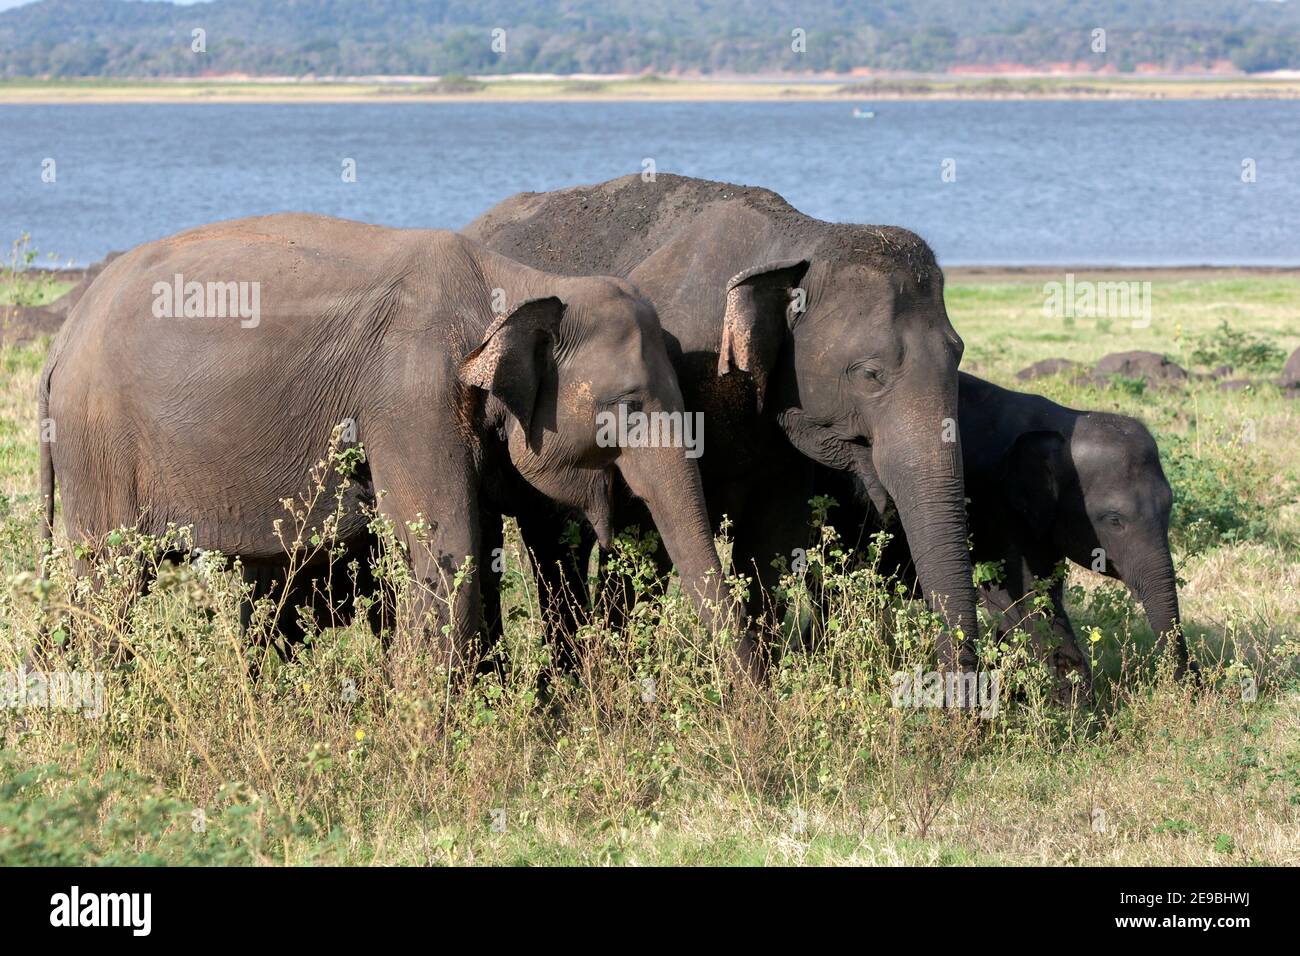 Wild elephants graze on grassland adjacent to the tank (man made reservoir) at Minneriya National Park near Habarana in central Sri Lanka. Stock Photo